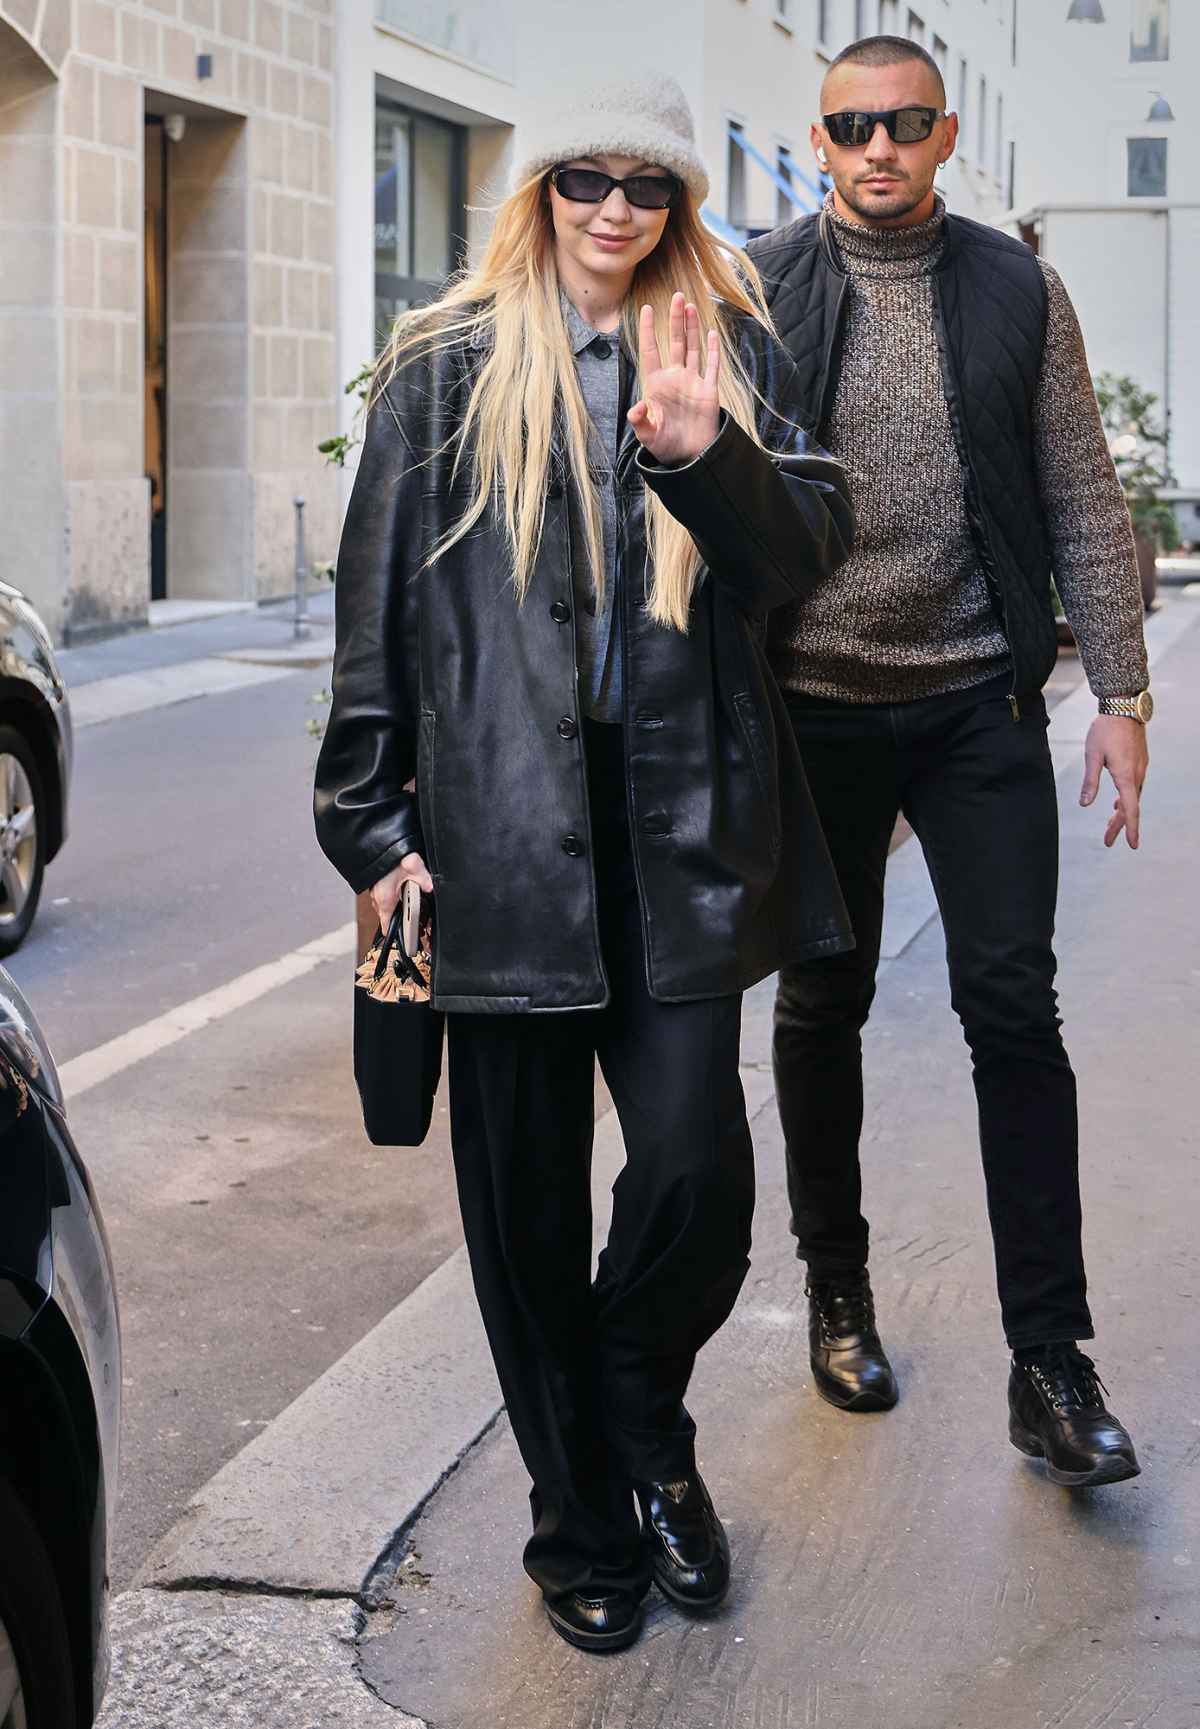 Gigi Hadid's Street Style and the Fendi Baguette